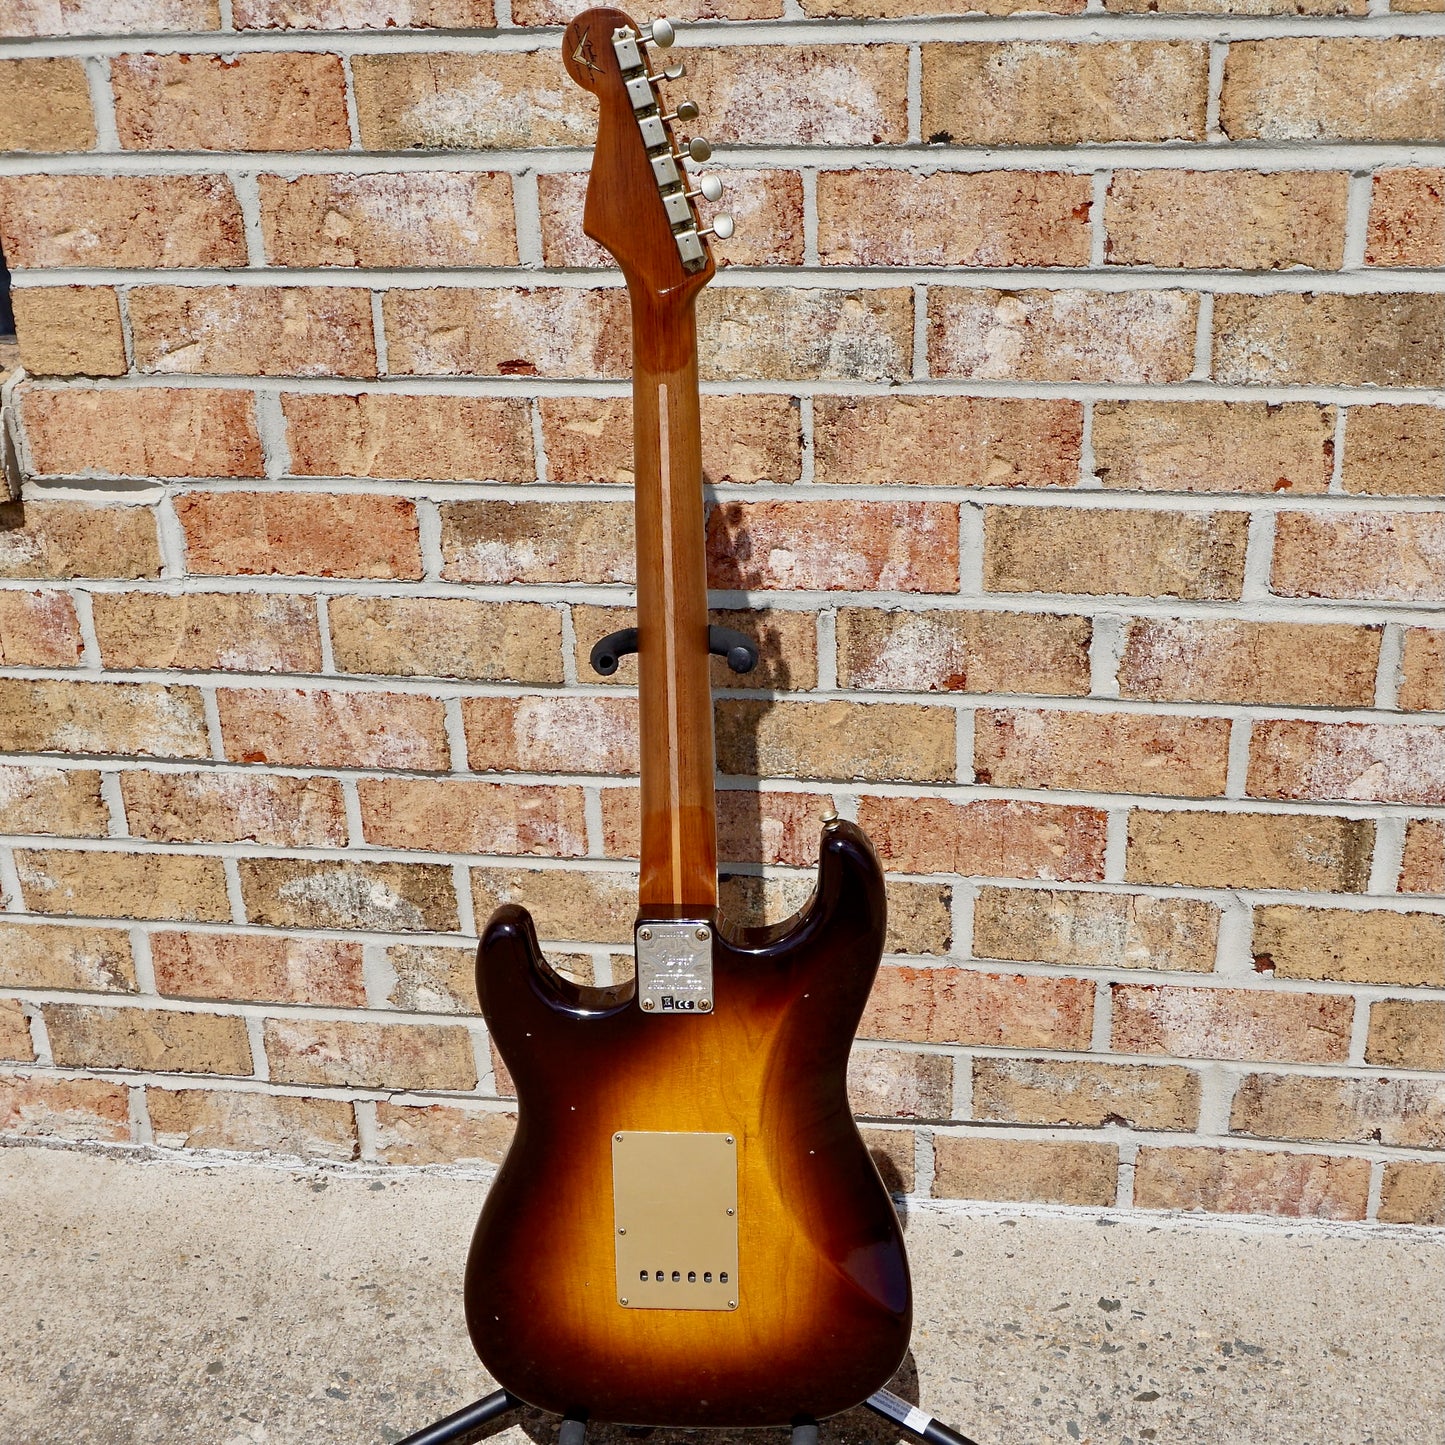 Fender Custom Shop Limited Edition 1954 Roasted Stratocaster Journeyman Relic 1-Piece Roasted Quarterswan Maple Neck Fingerboard Wide-Fade Chocolate 2-Color Sunburst